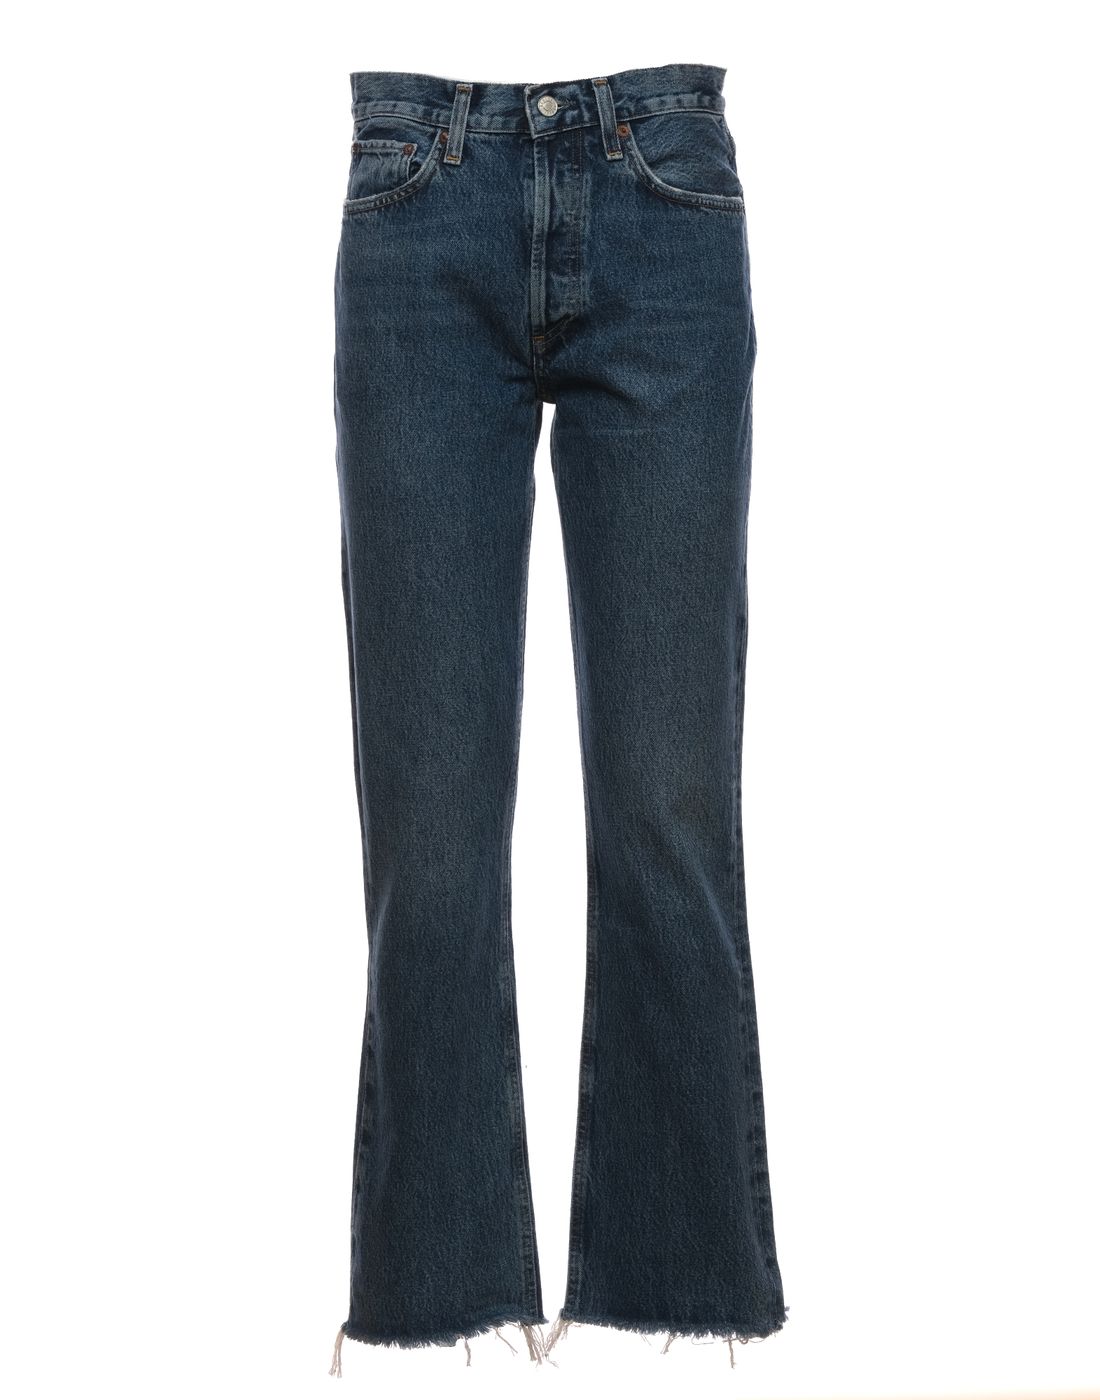 Jeans woman a180 1371 sfera agolde